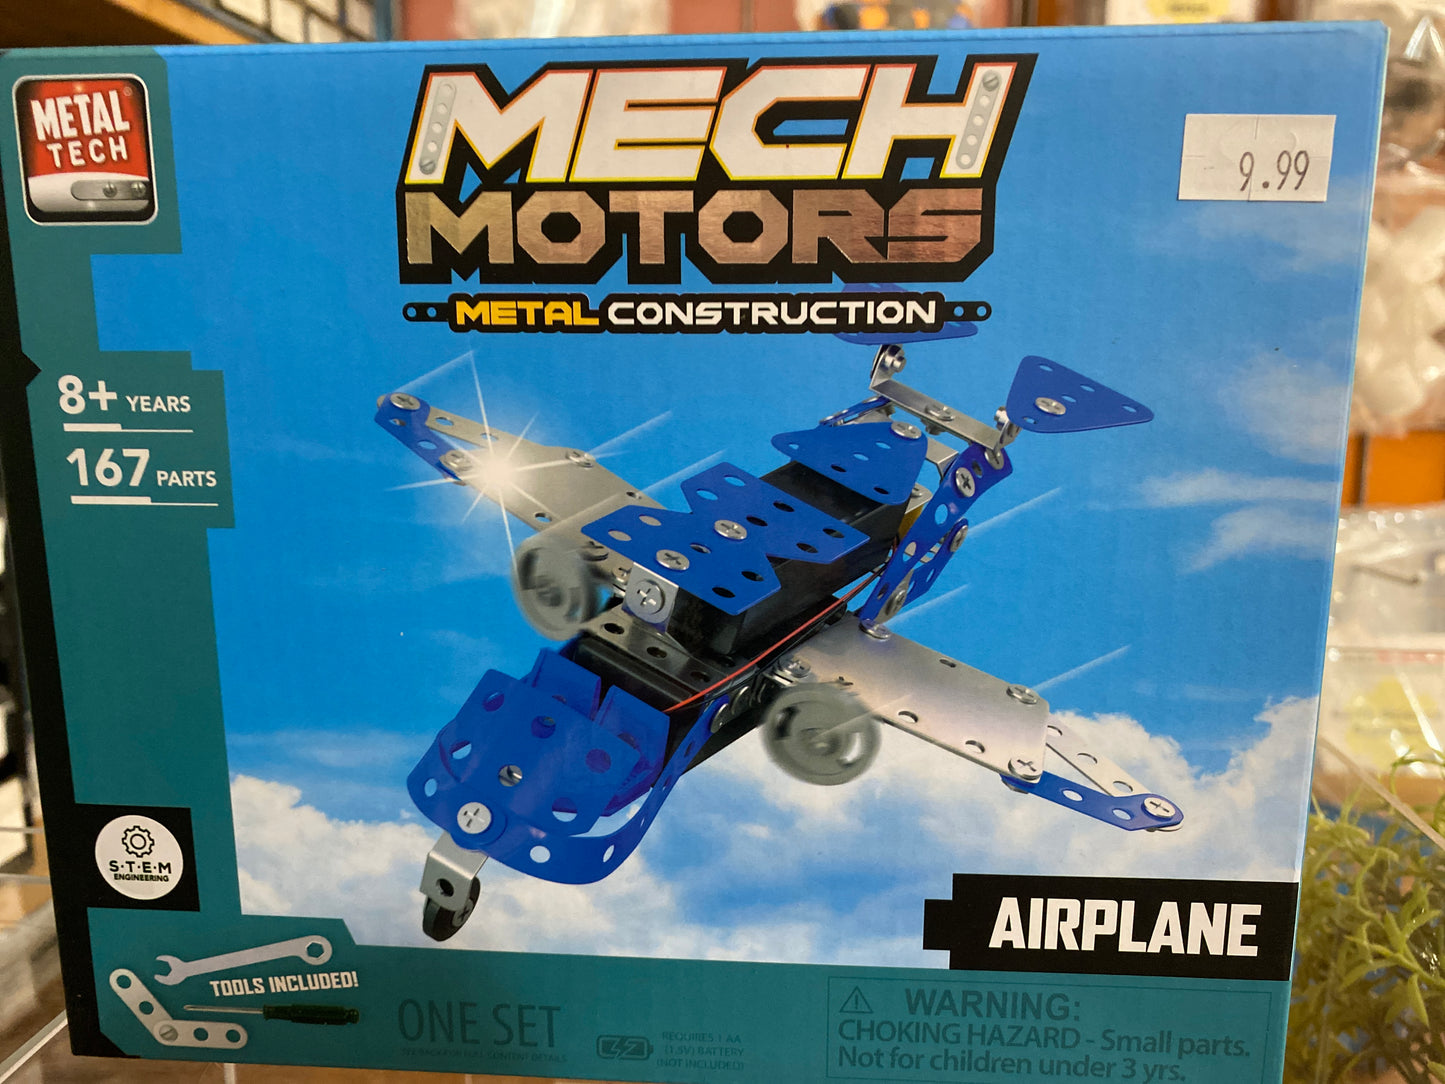 Mech Motors